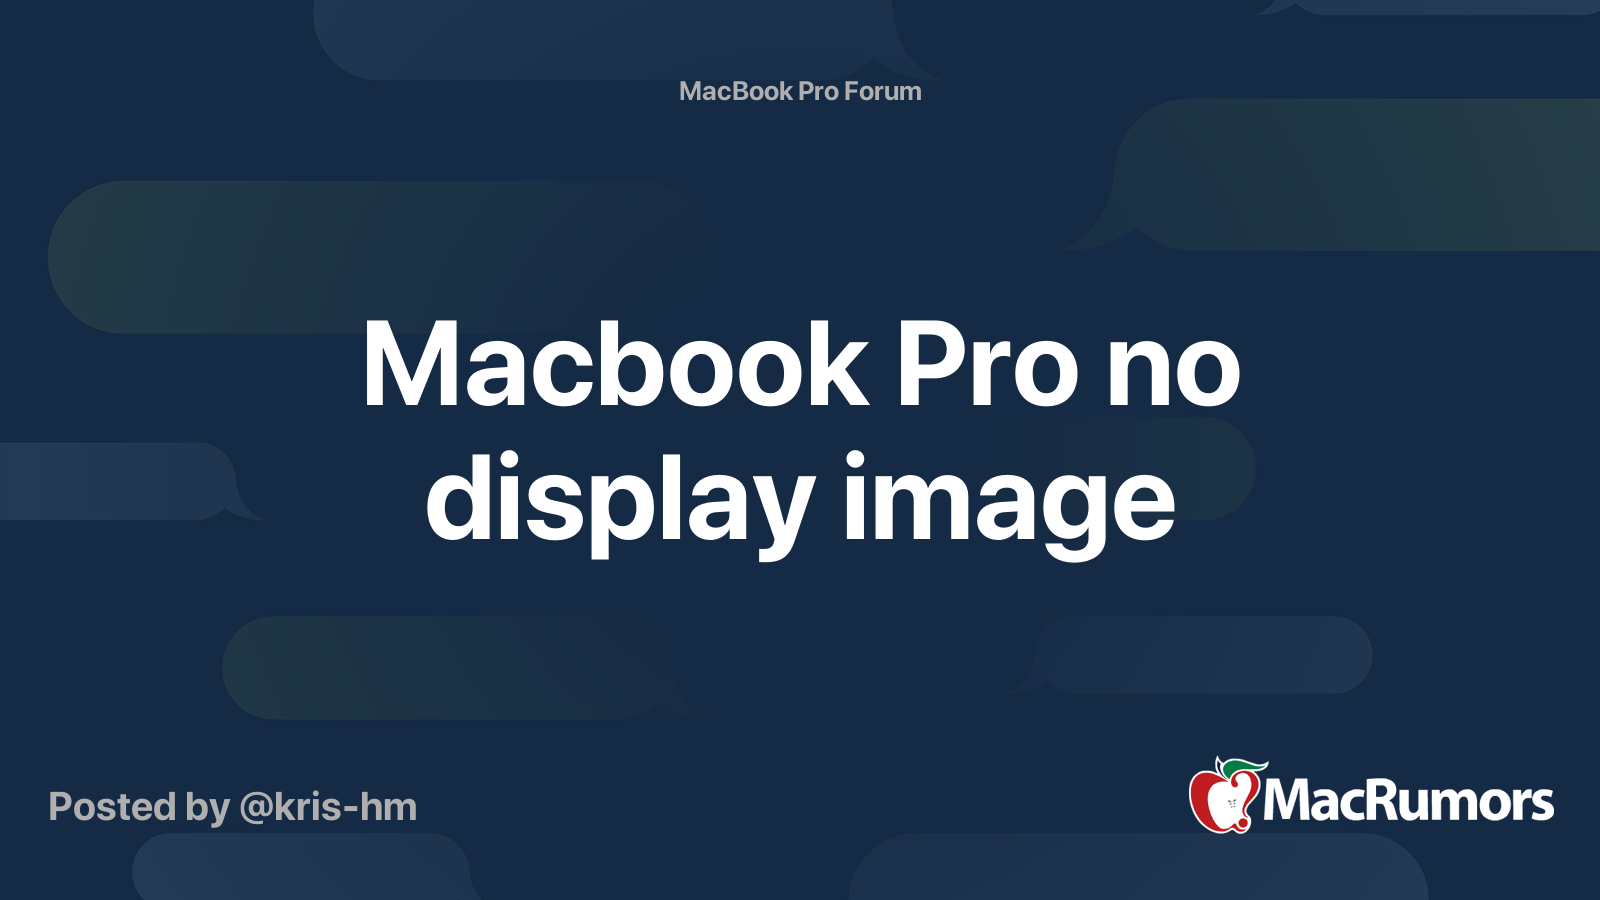 Macbook Pro no display image | MacRumors Forums